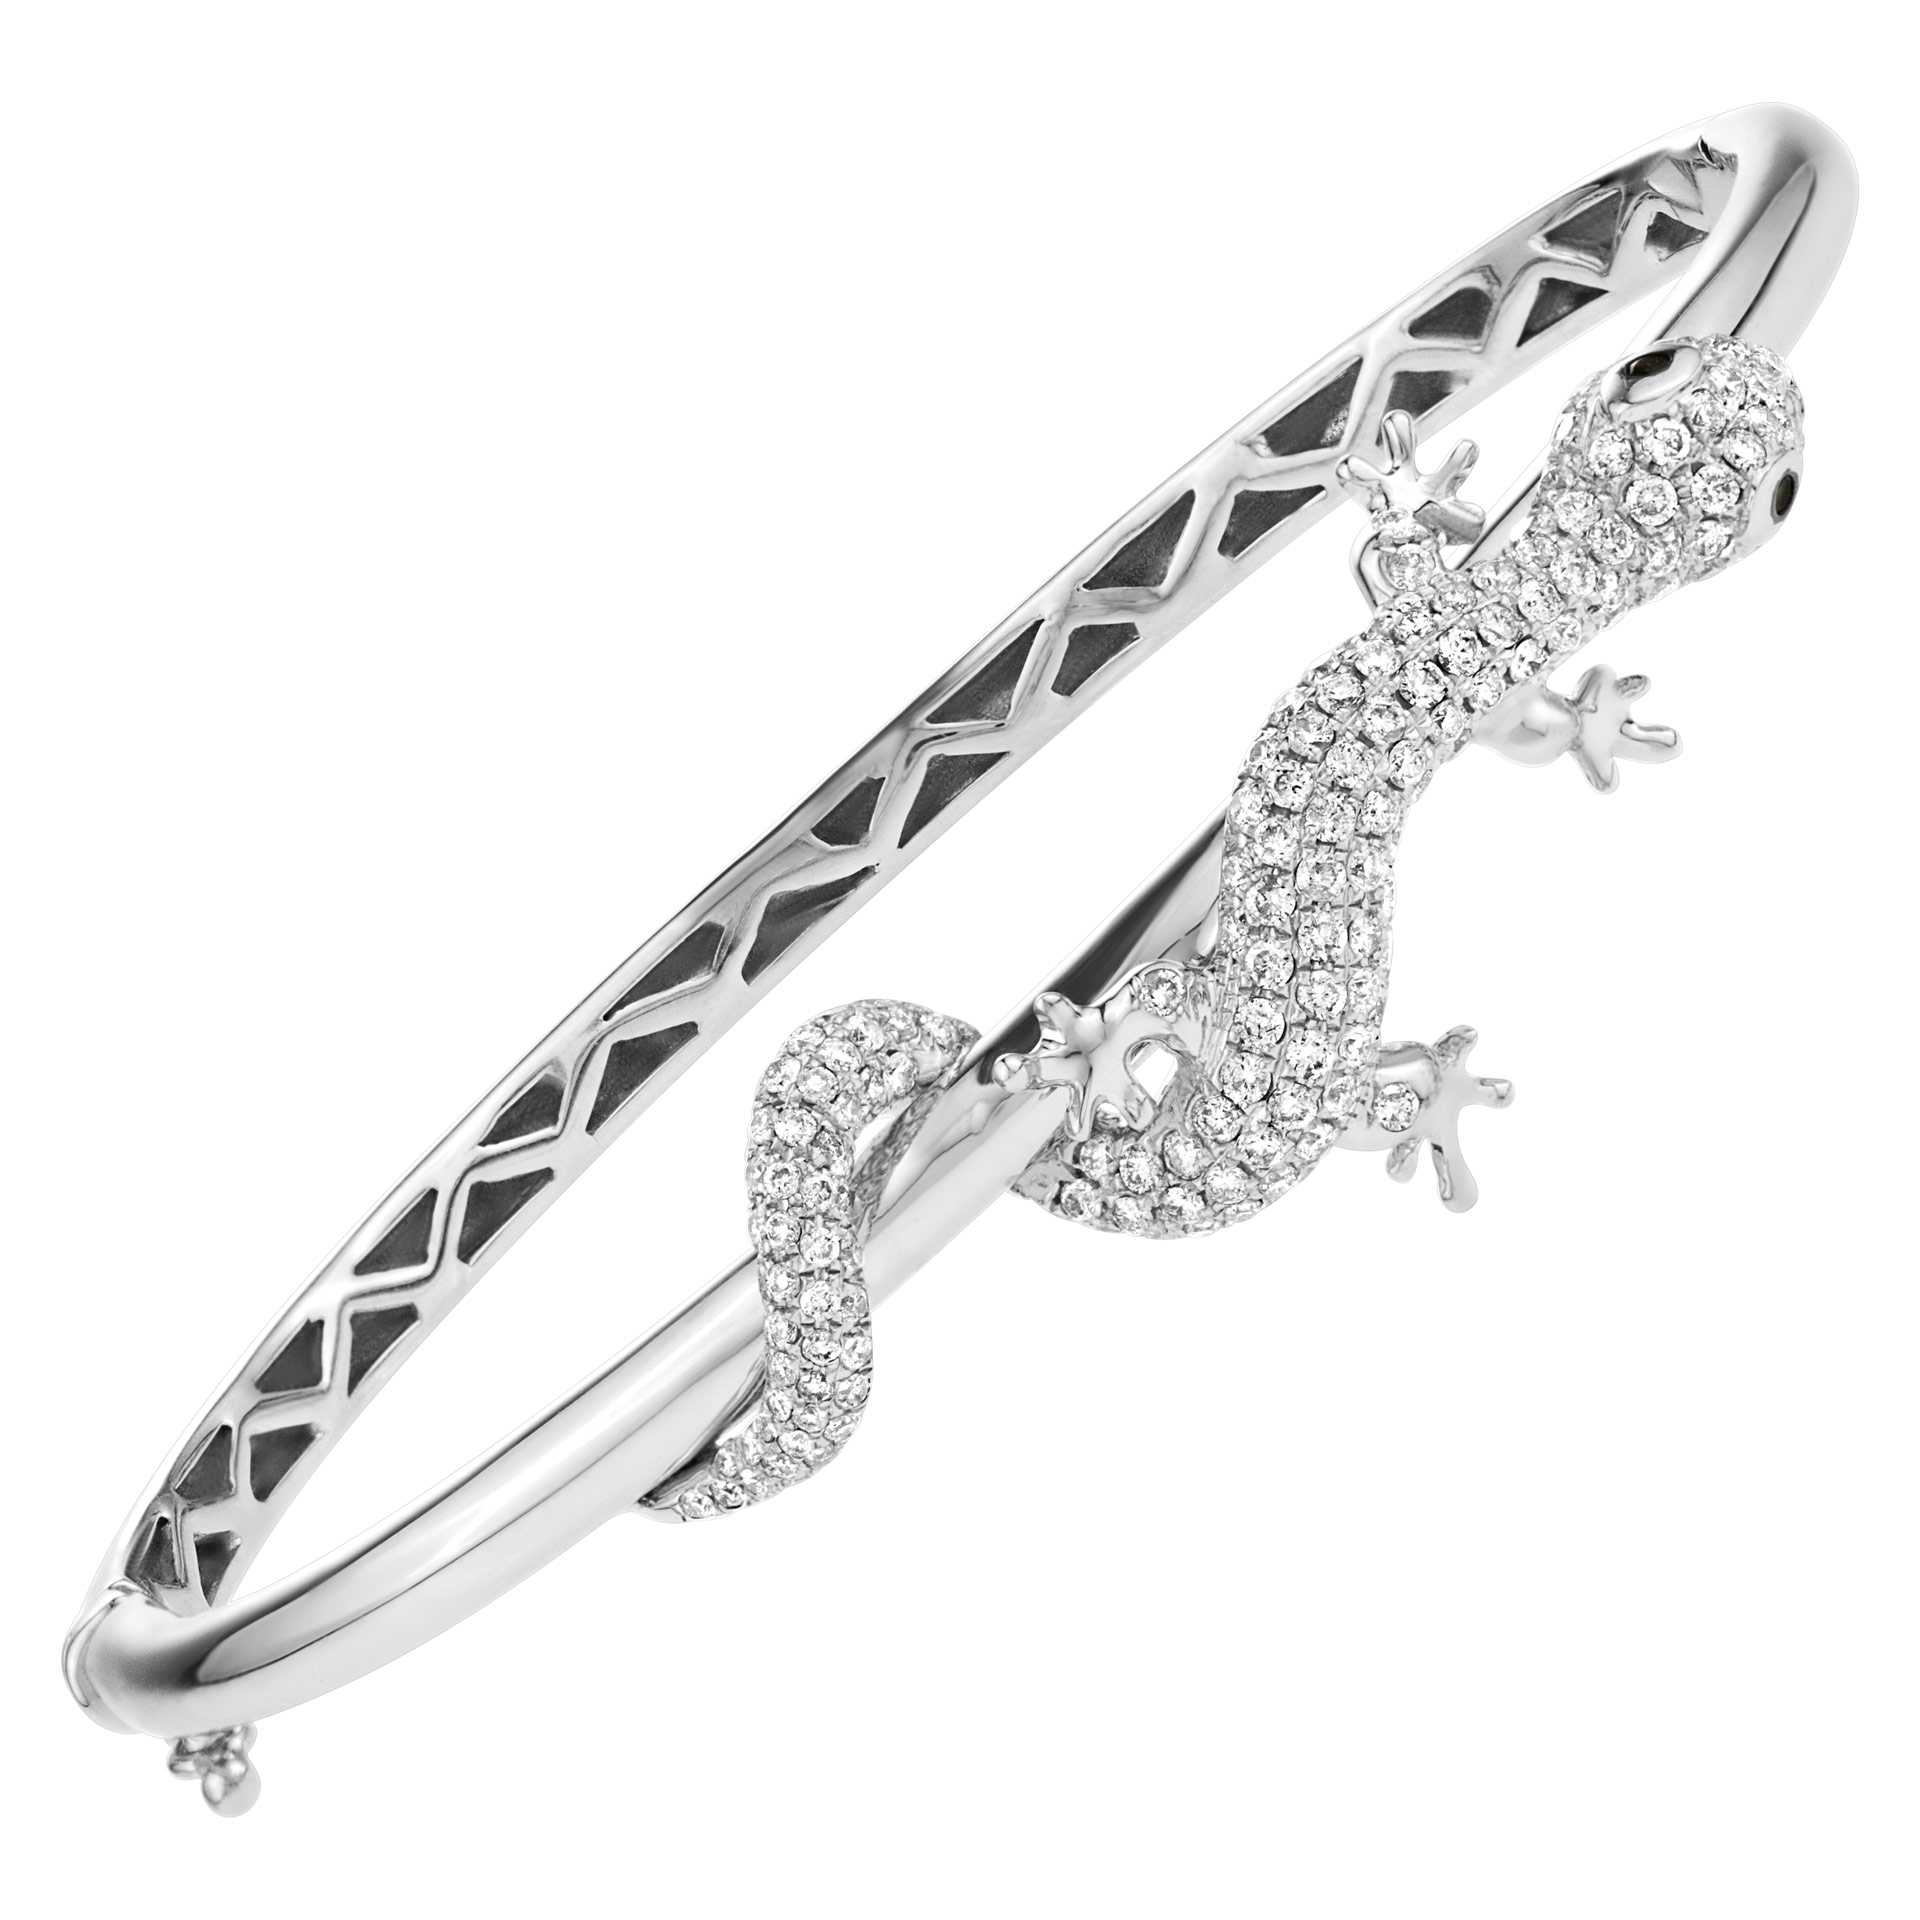 Gecko 18k white gold bangle with diamond & tsavorite